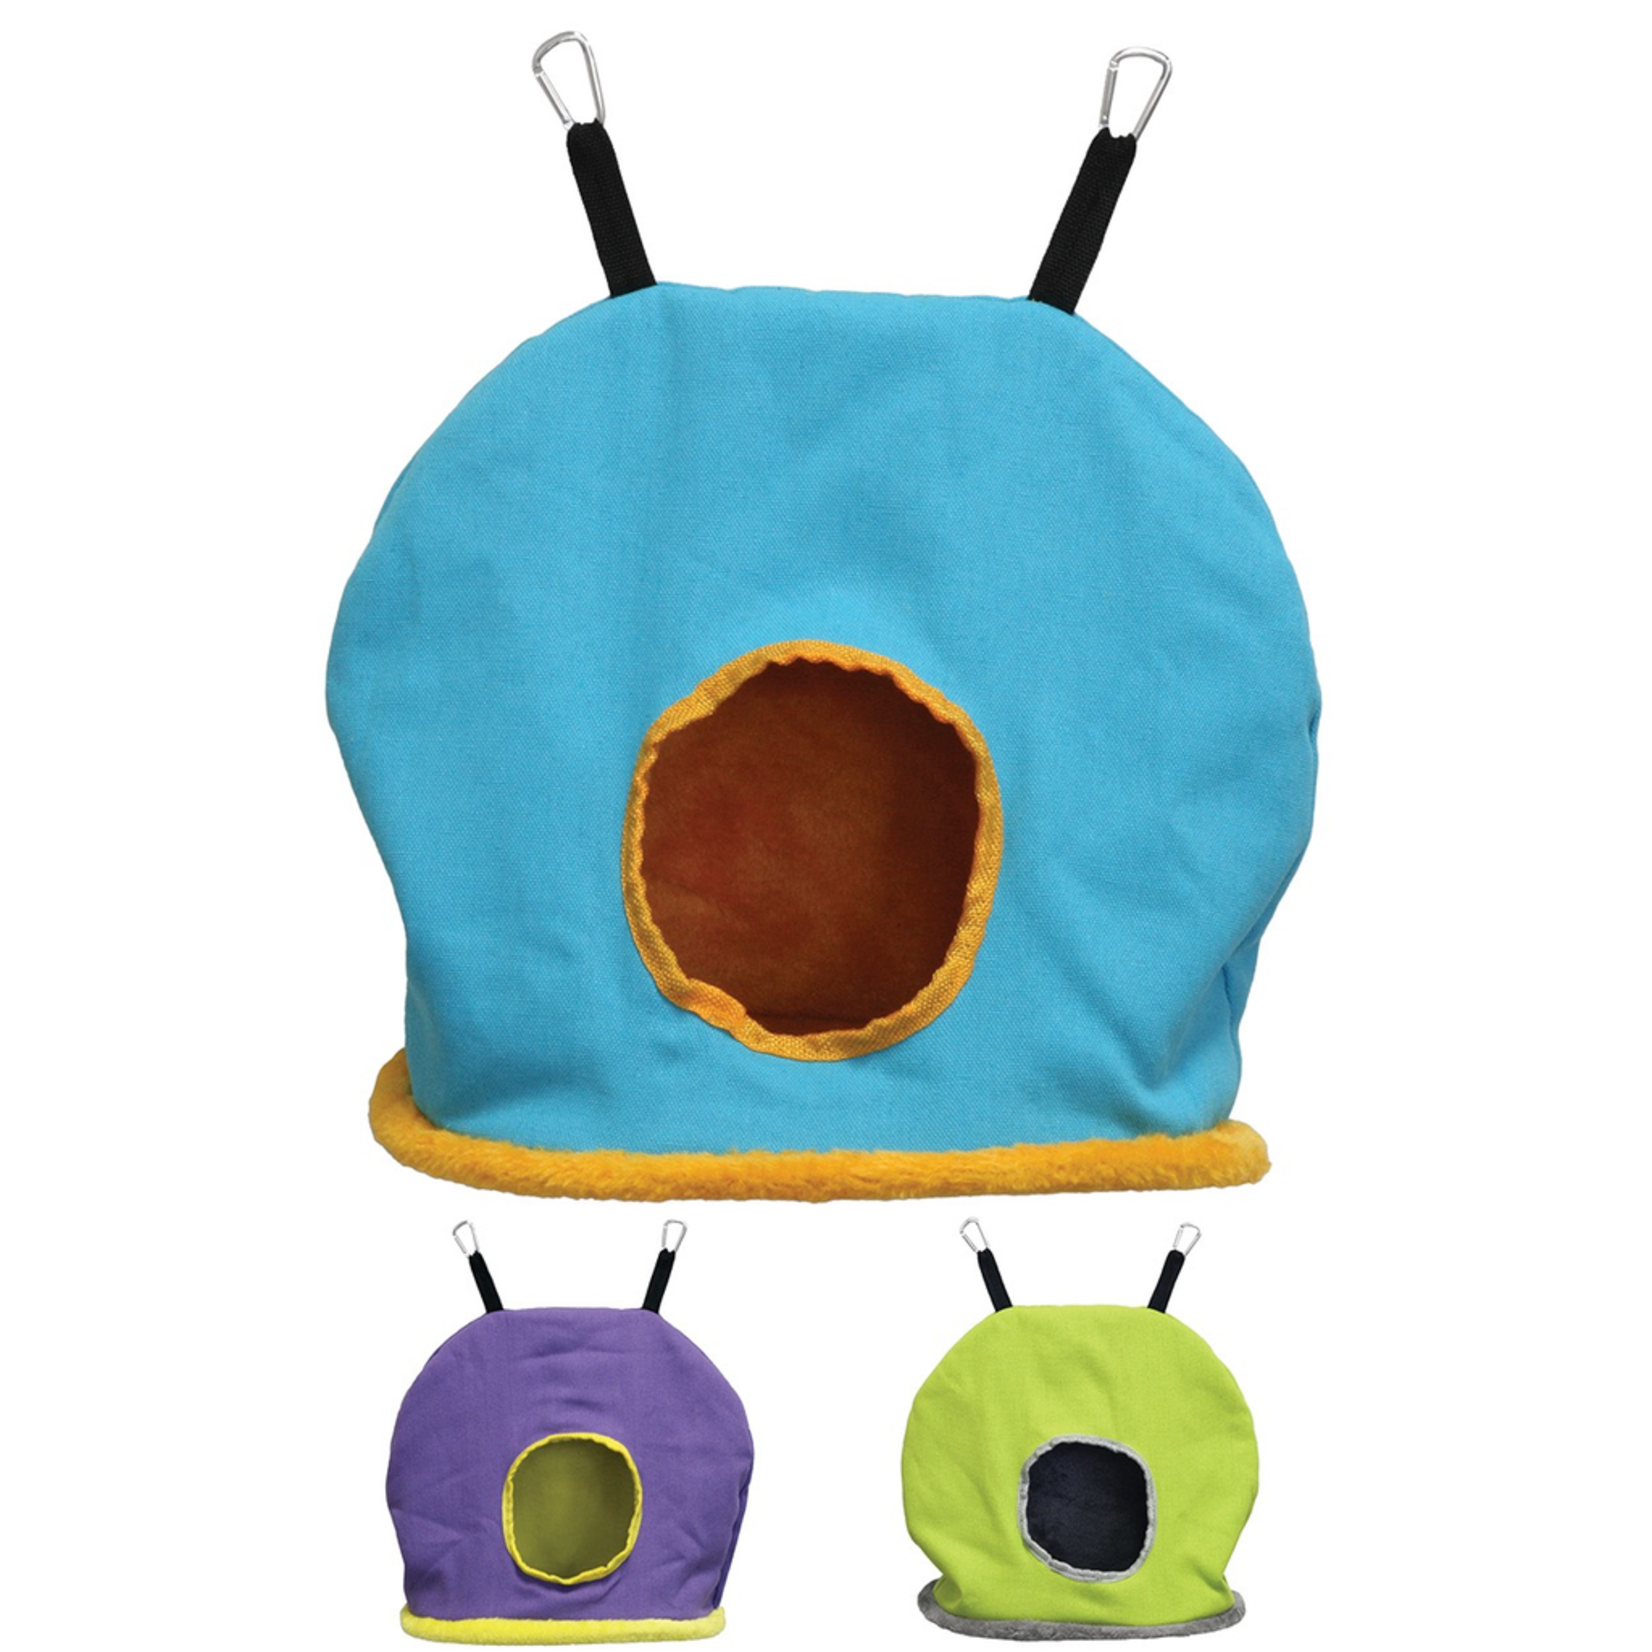 PREVUE PETS Snuggle Sack - Assorted Colors - Jumbo